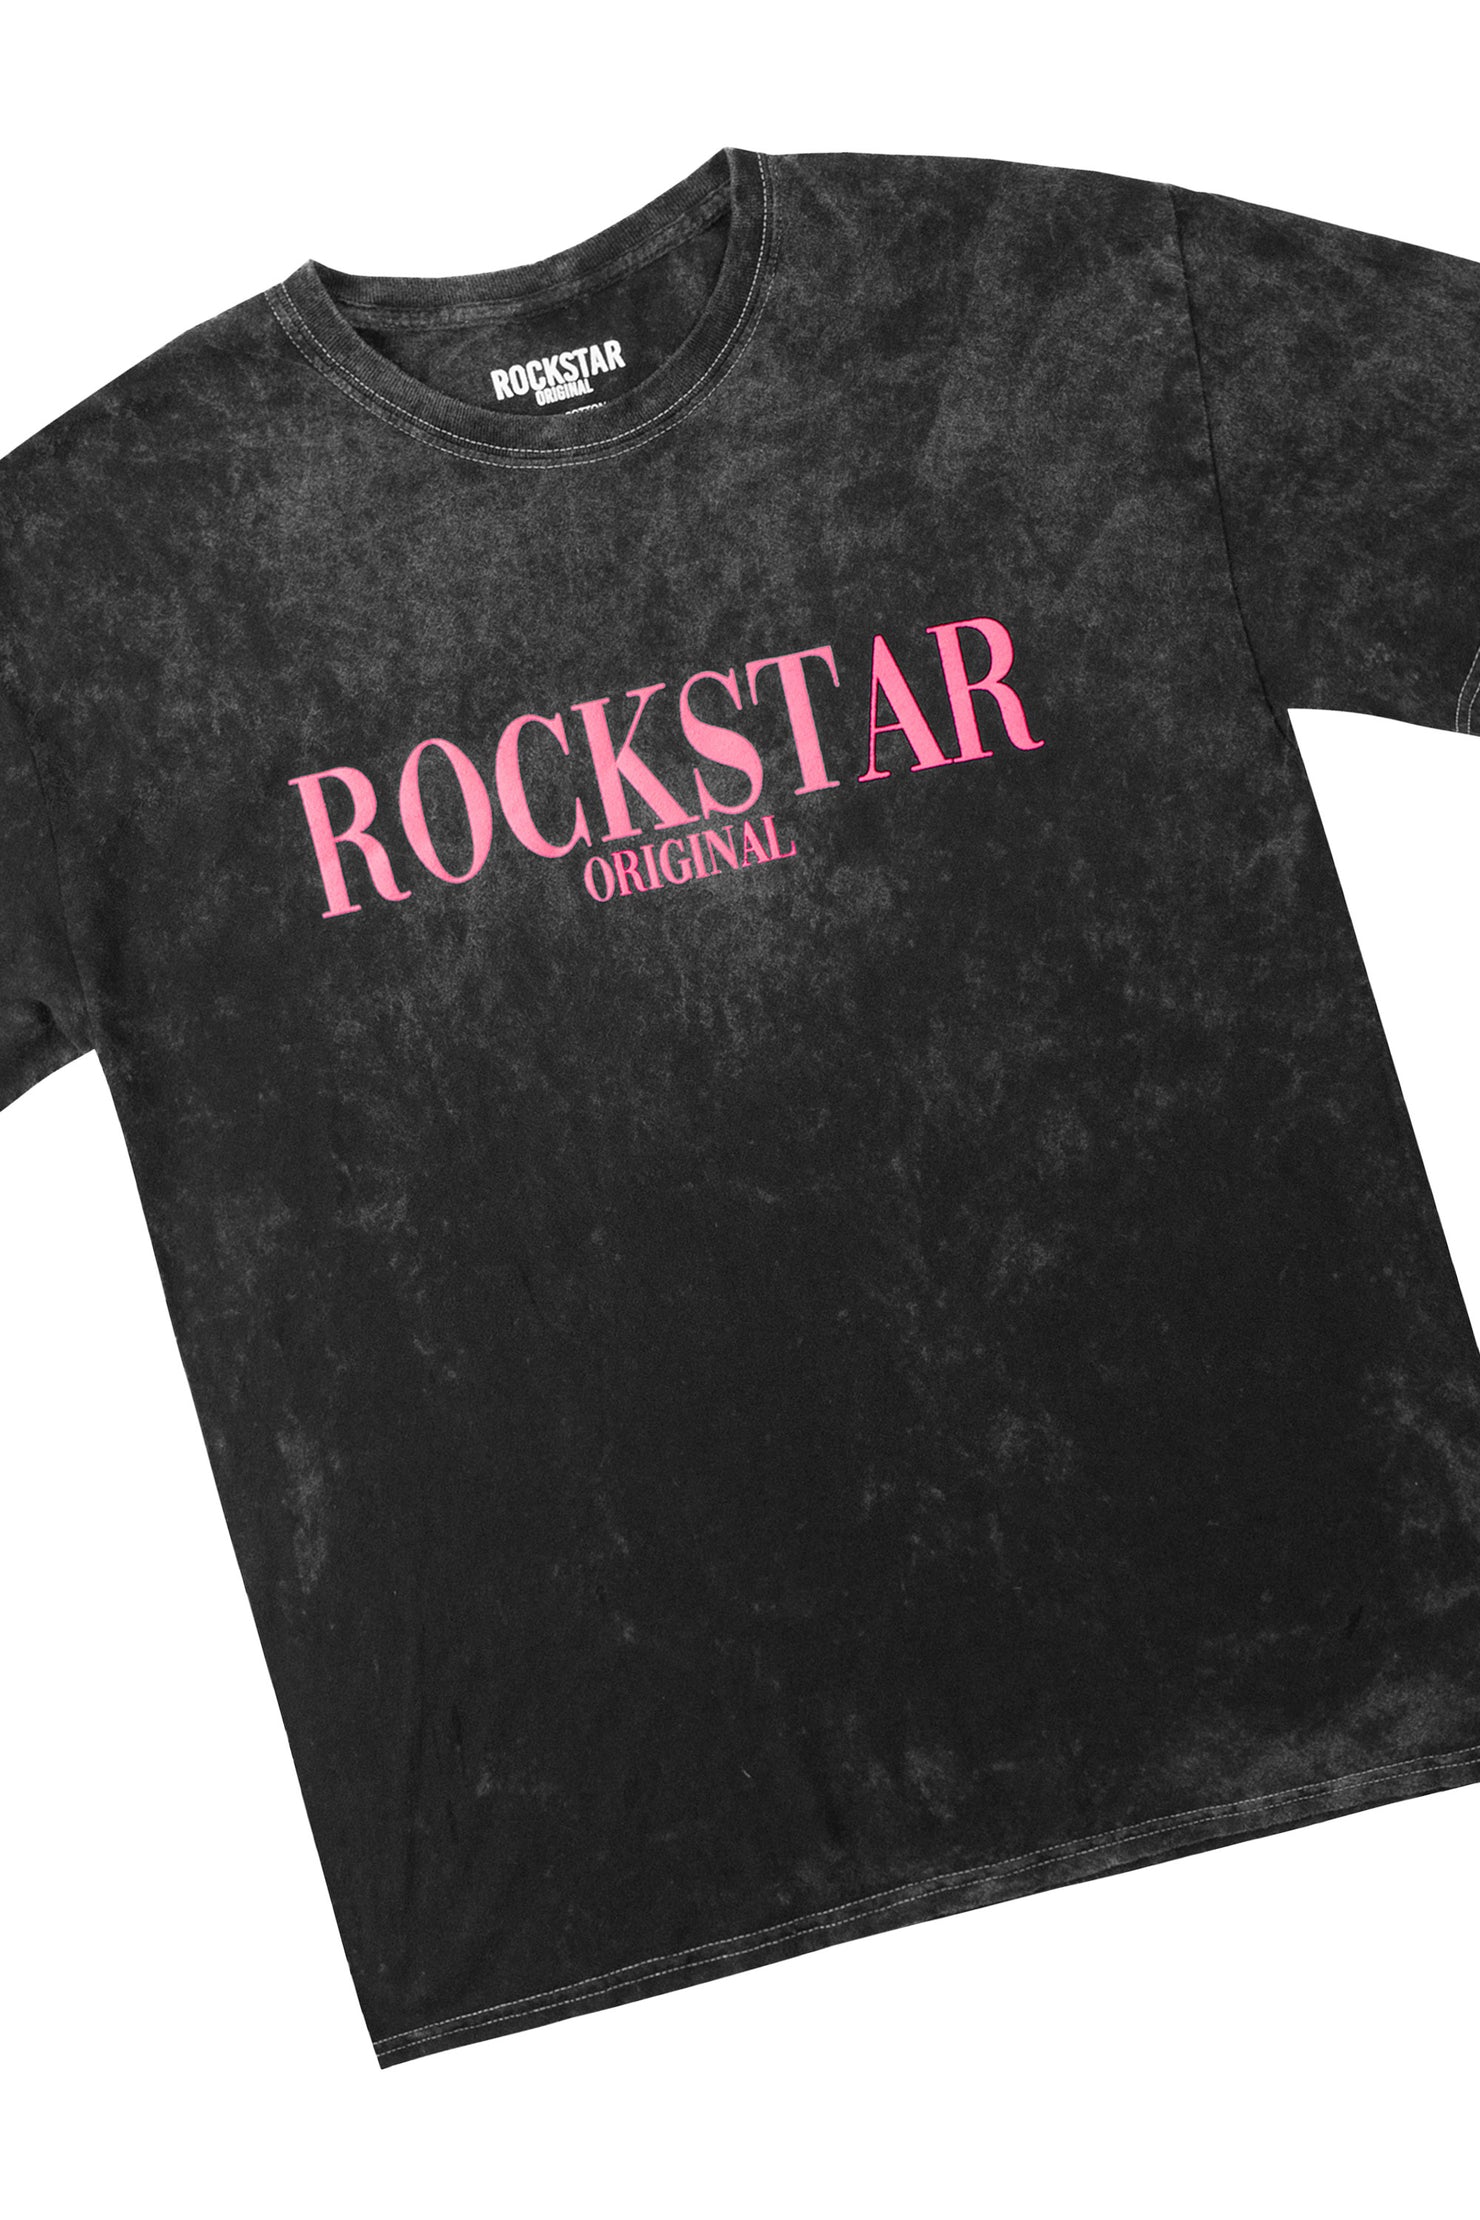 Octavio Grey/Pink Basic T-Shirt Short Set